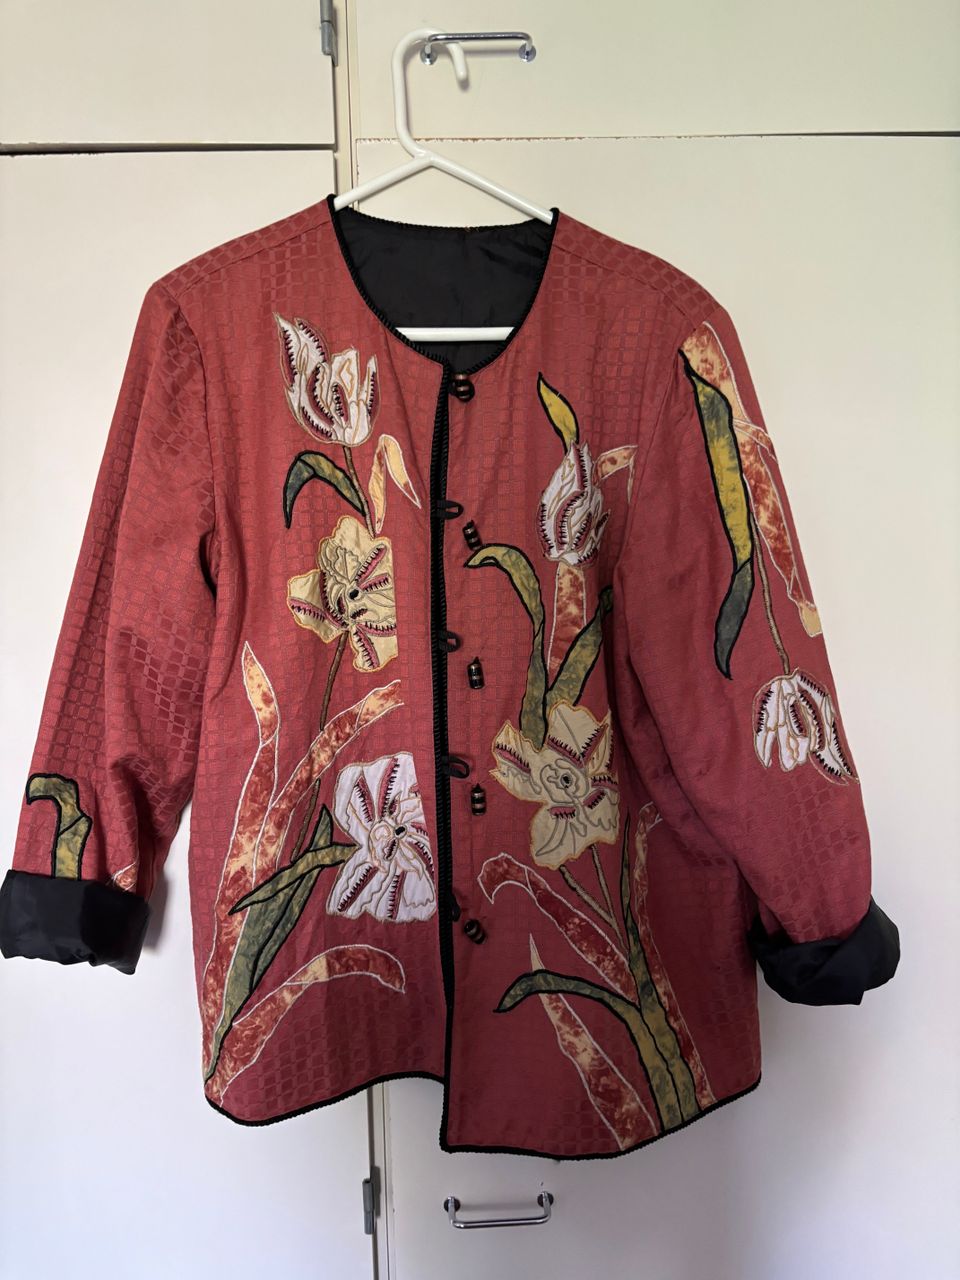 Vintage jakku/takki